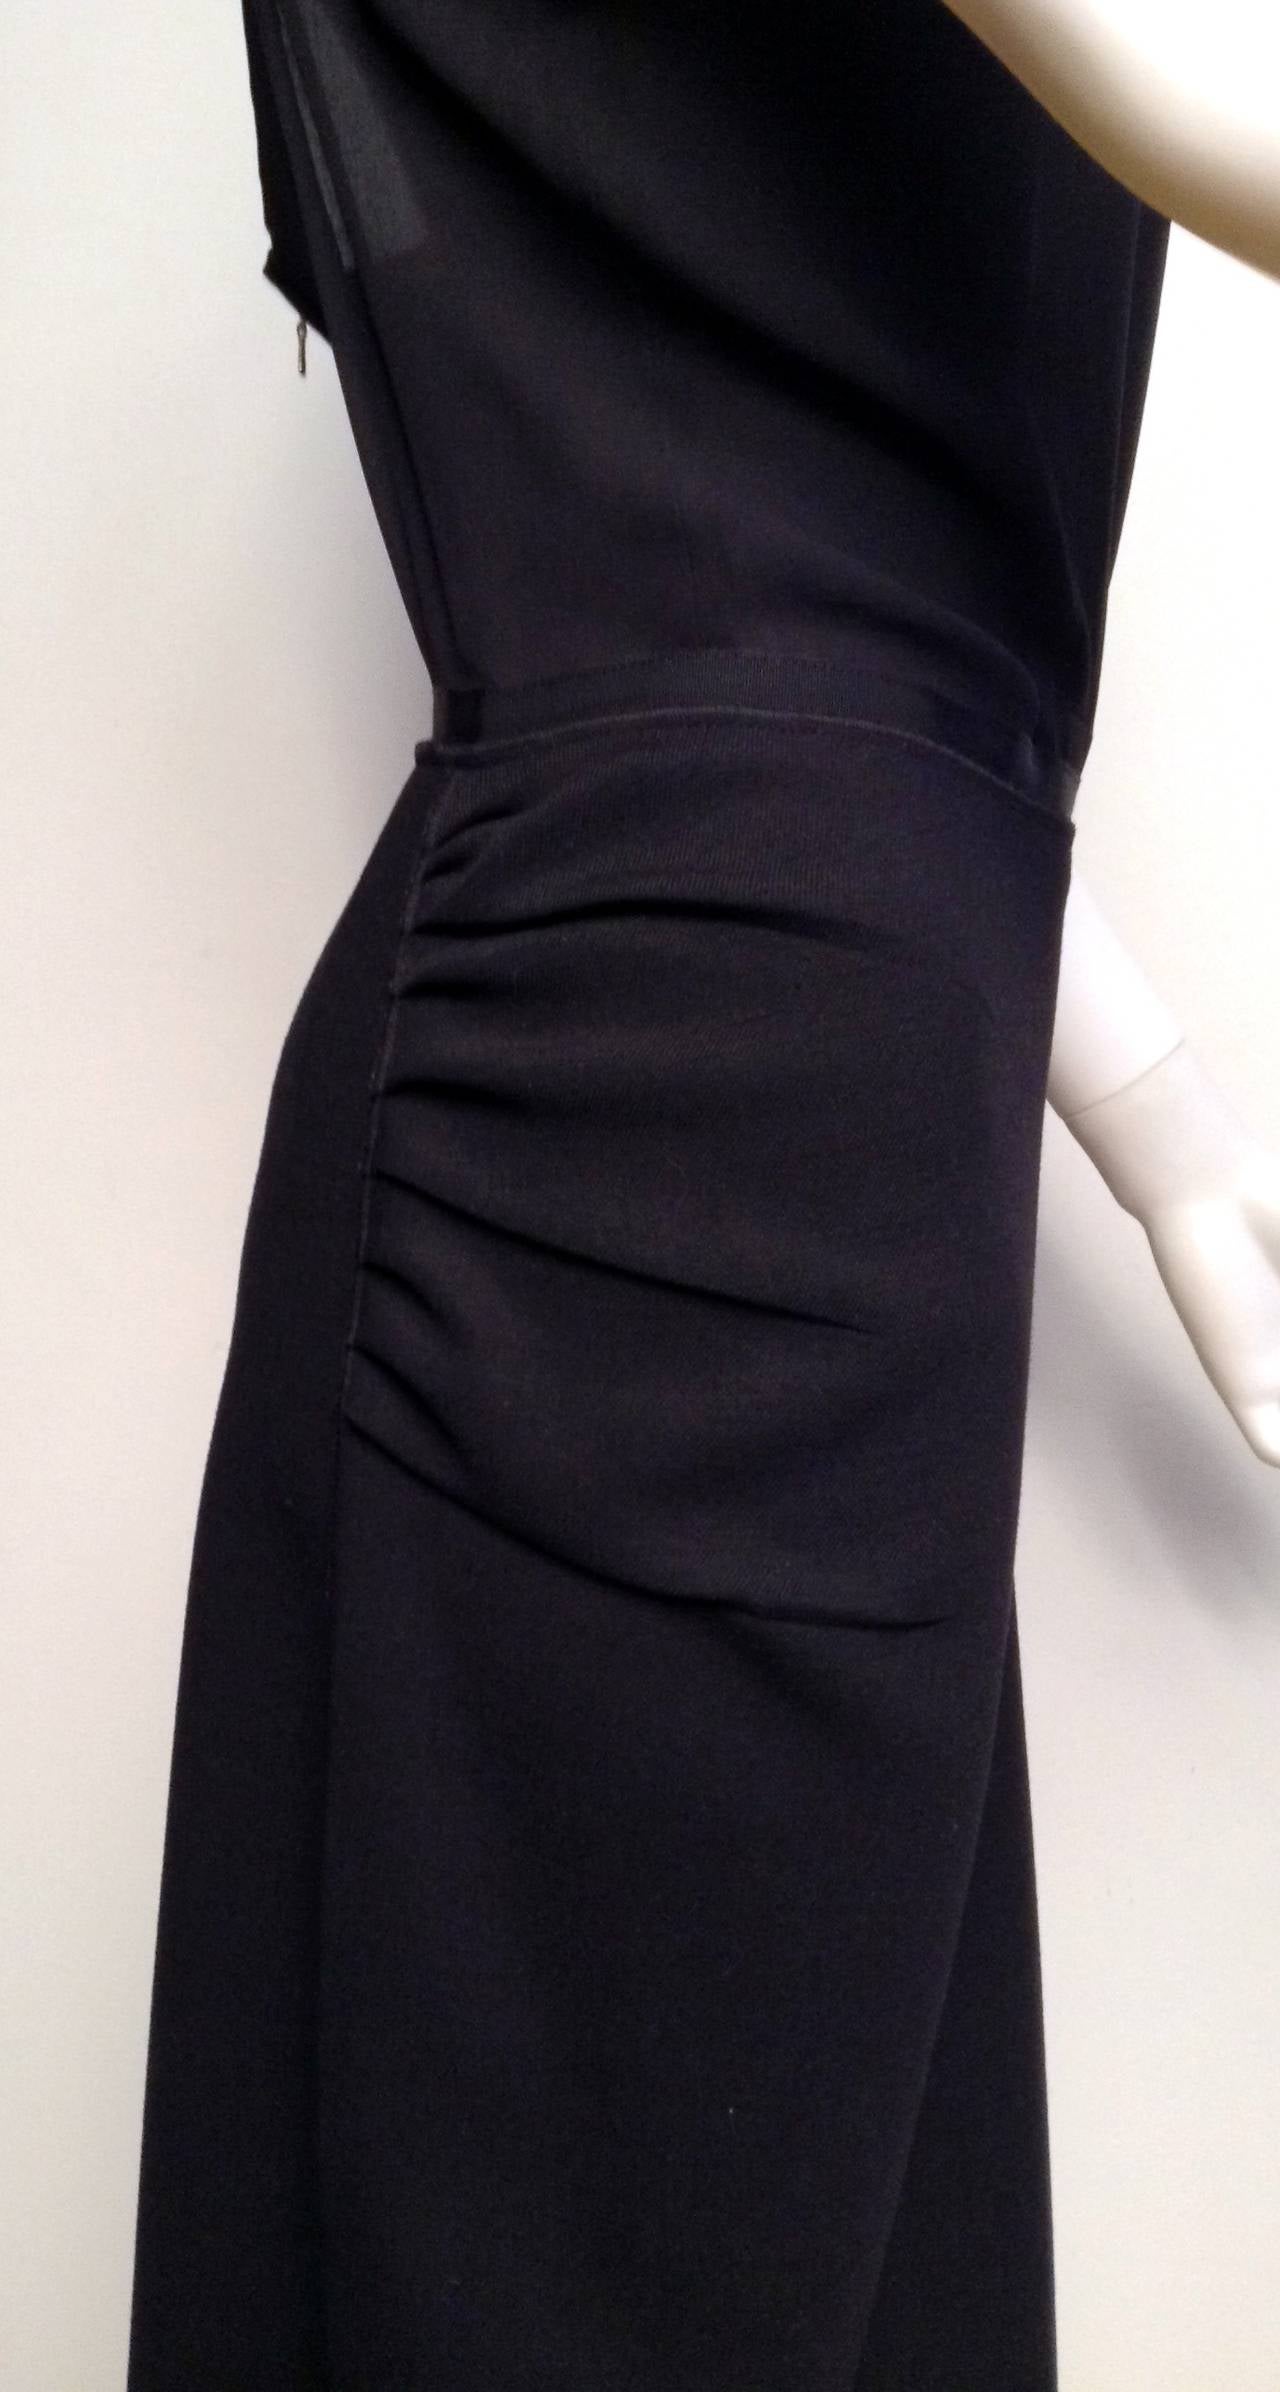 Nina Ricci Black Cocktail Dress Size 42/10 2012 For Sale 1